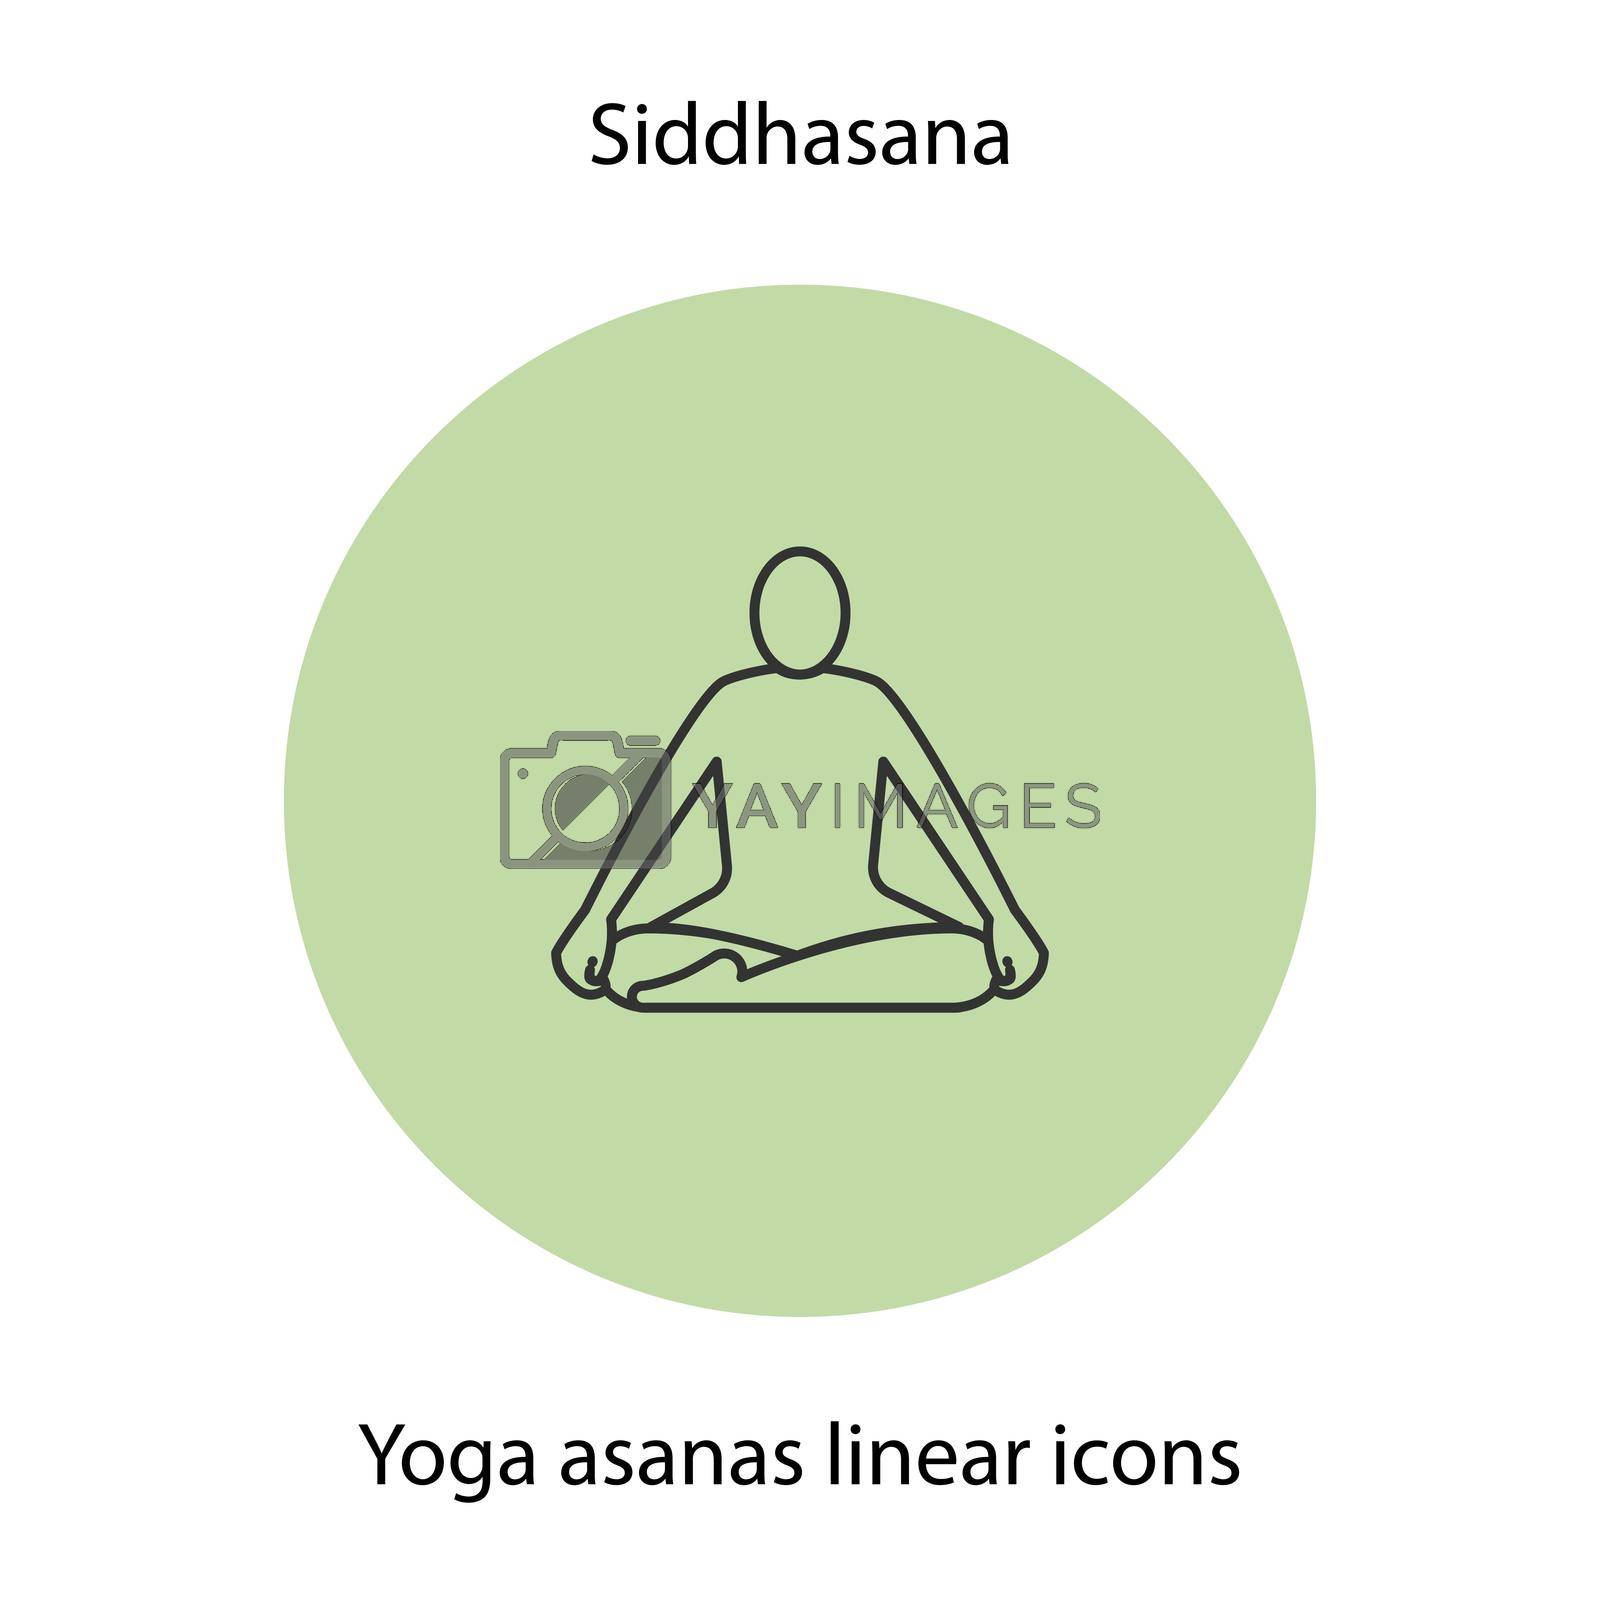 Siddhasana yoga position linear icon. Thin line illustration. Yoga asana contour symbol. Vector isolated outline drawing